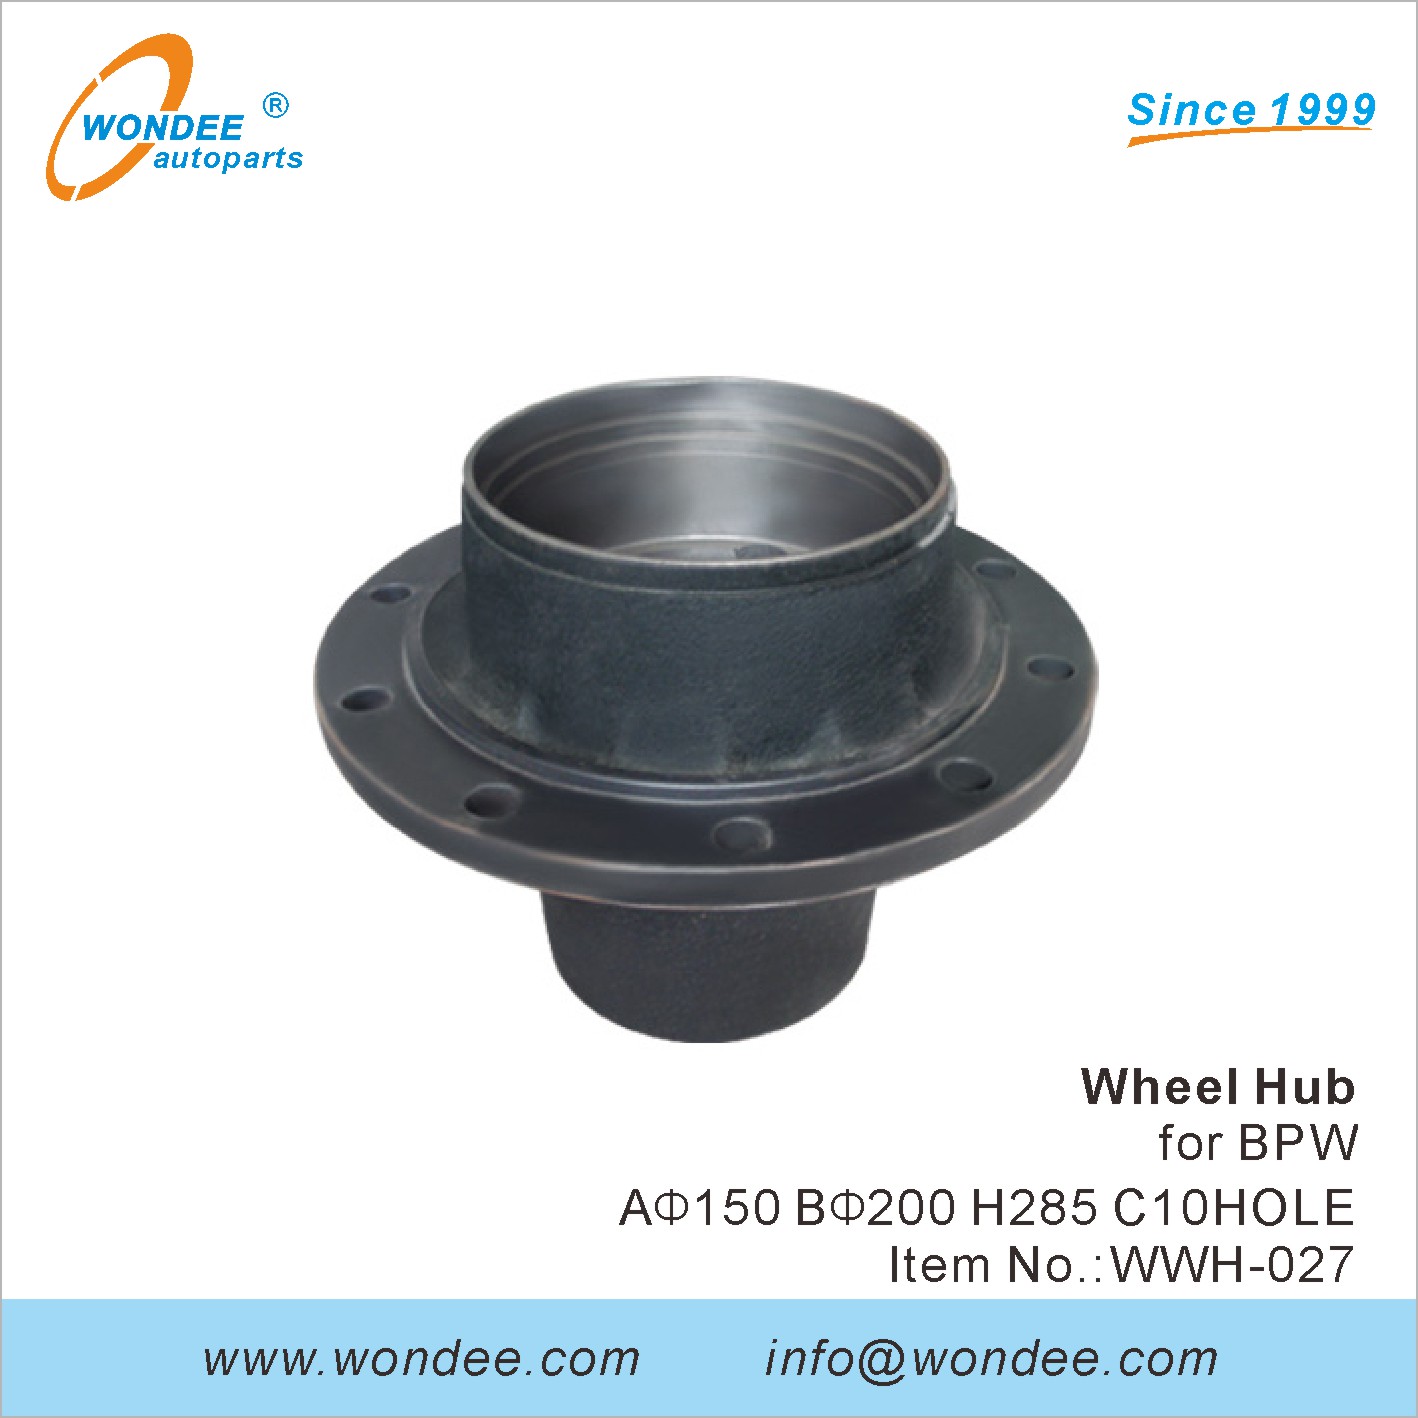 WONDEE wheel hub (27)